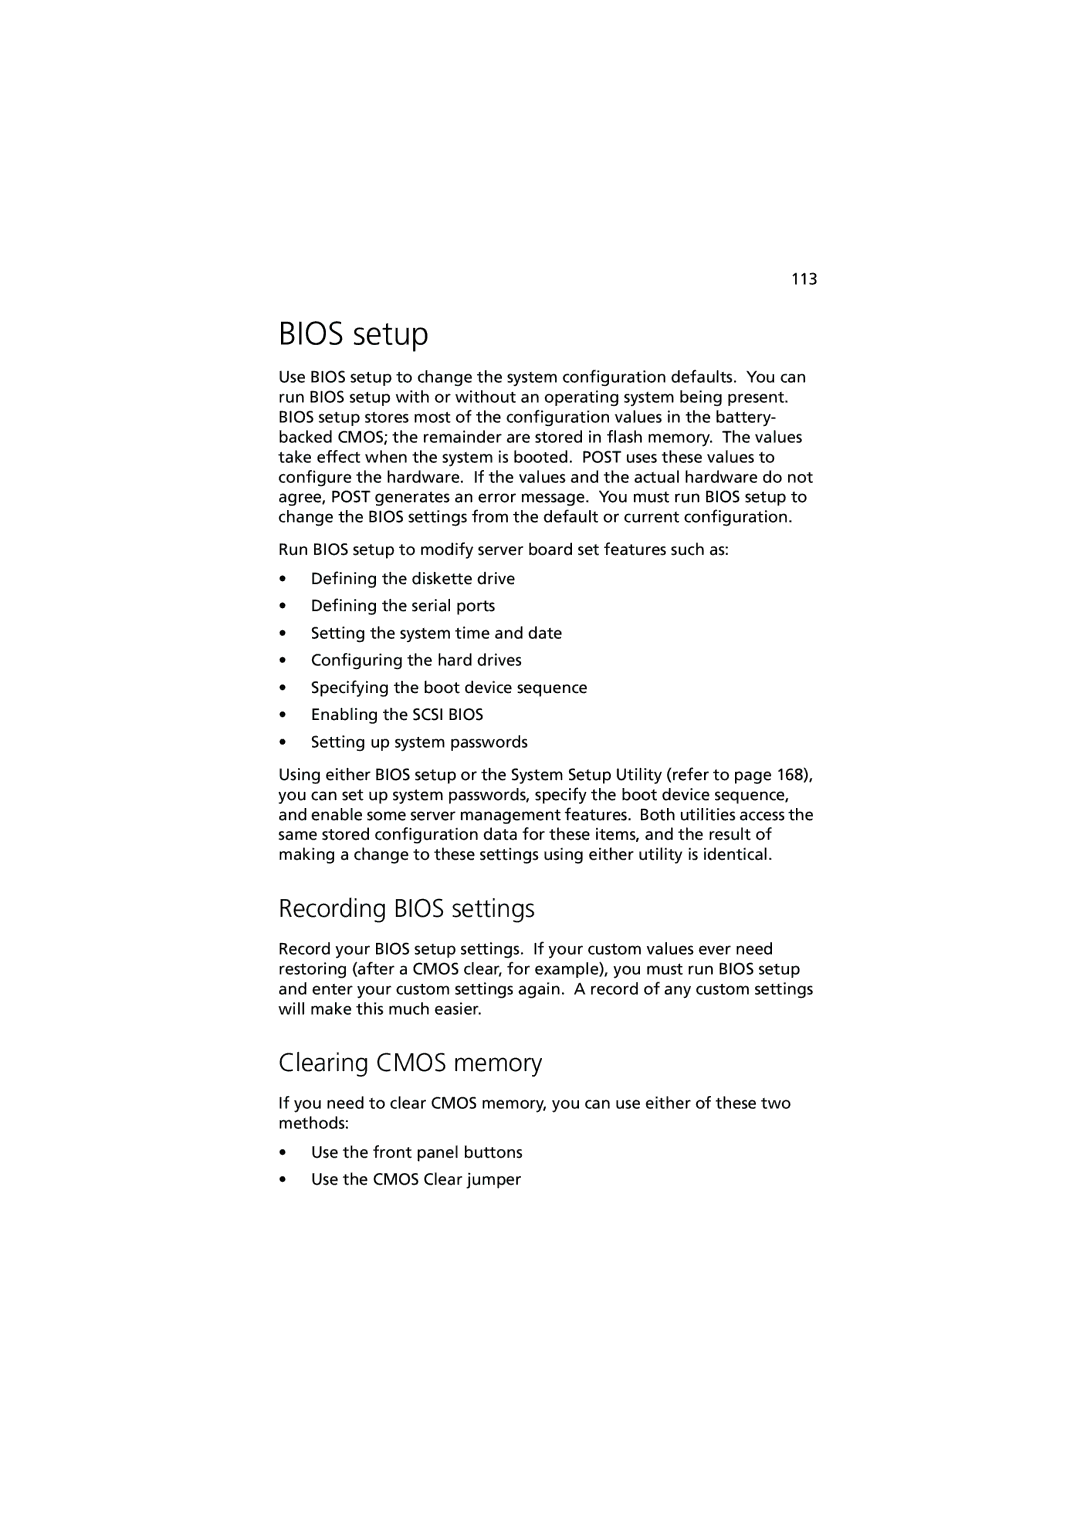 Acer Altos G900 manual Bios setup, Recording Bios settings, Clearing Cmos memory 